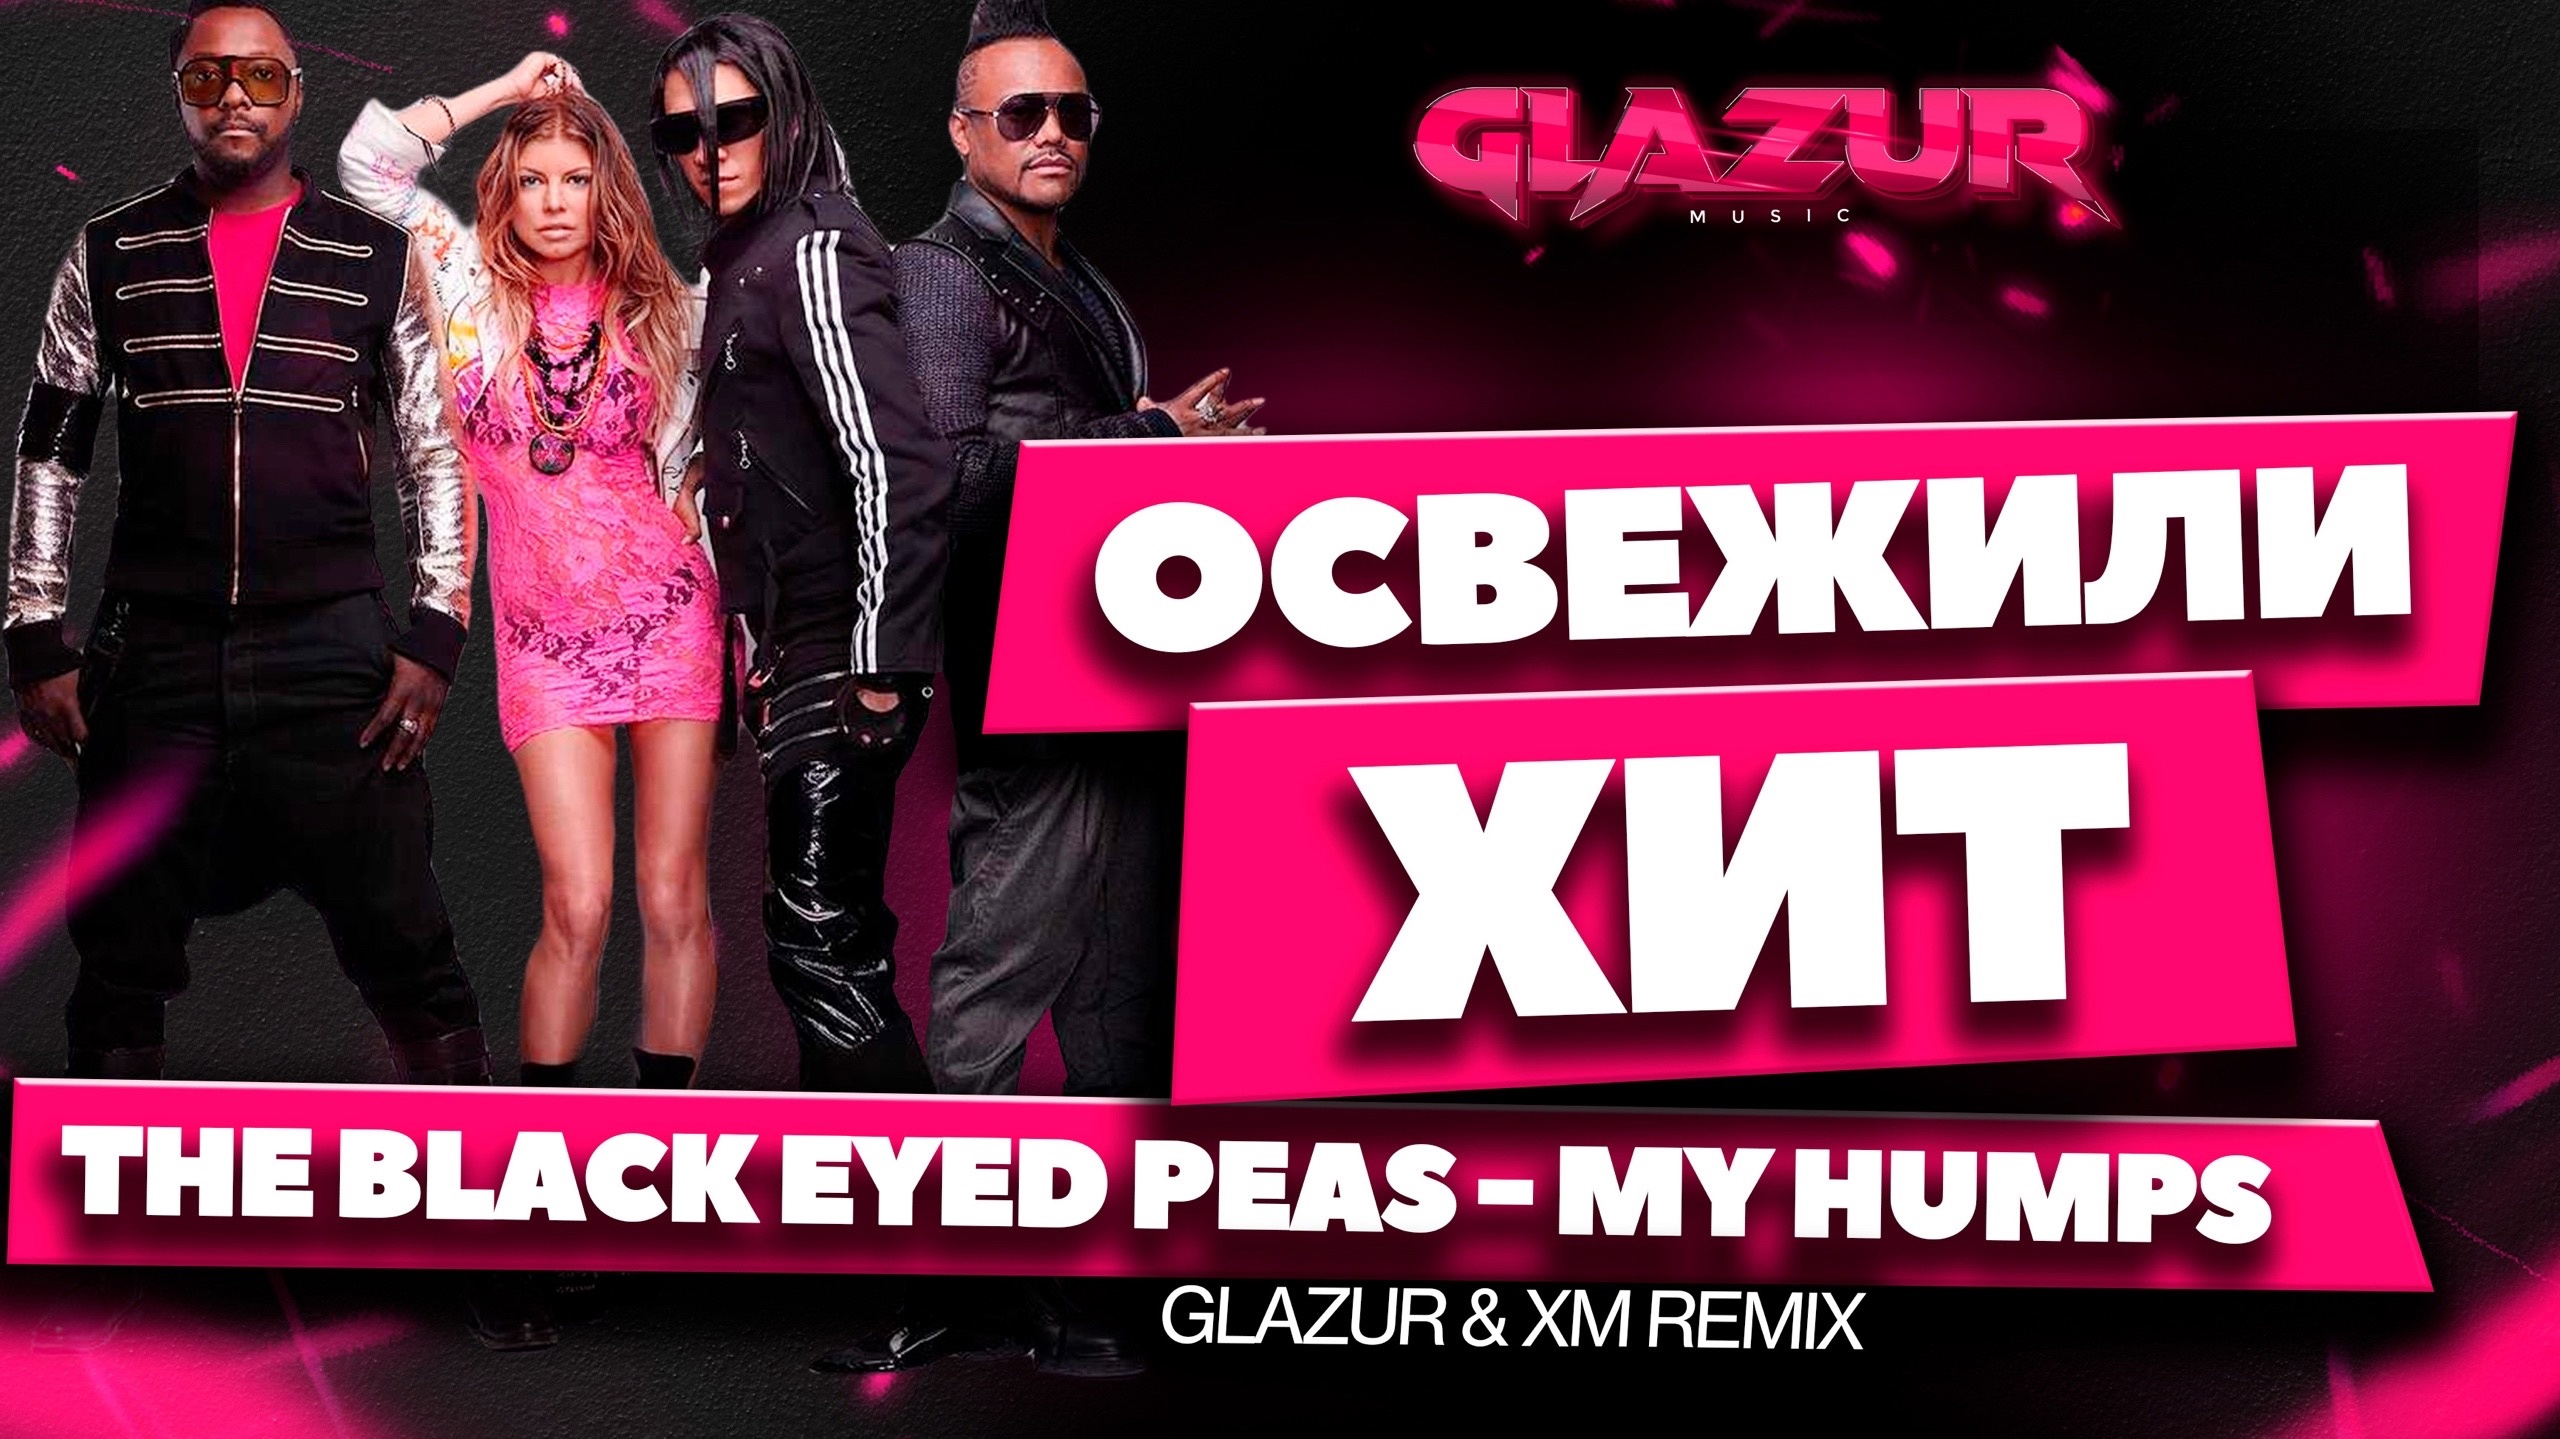 The Black Eyed Peas - My Humps (Glazur & XM Remix)